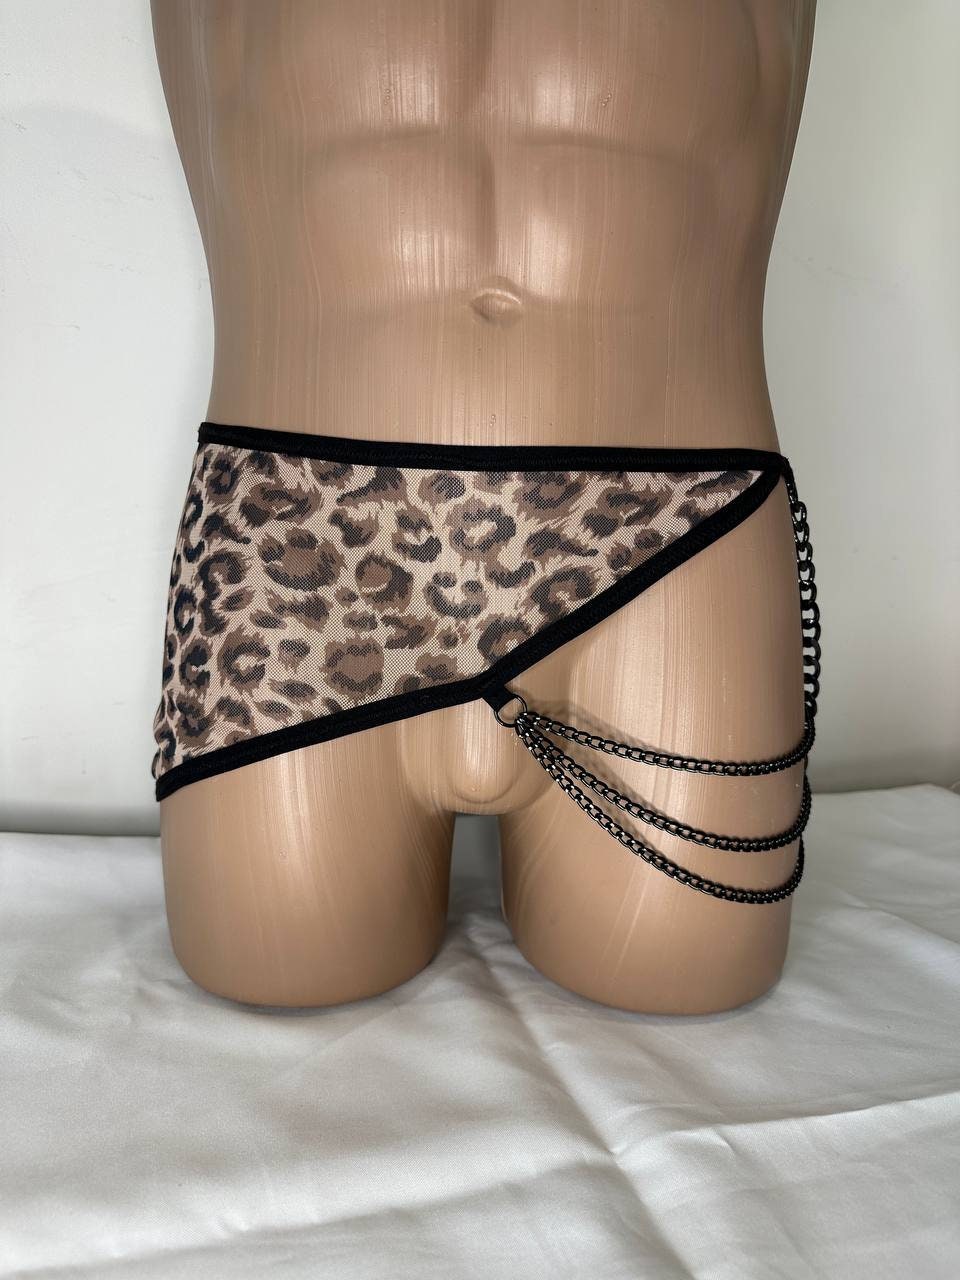 Sheer Sexy Lingerie / Nude Black Mesh Kinky Lingerie Set / Extraordinary  Hot Lingerie / Holiday Gift for Her / Cutout Thong Bikini Panties 